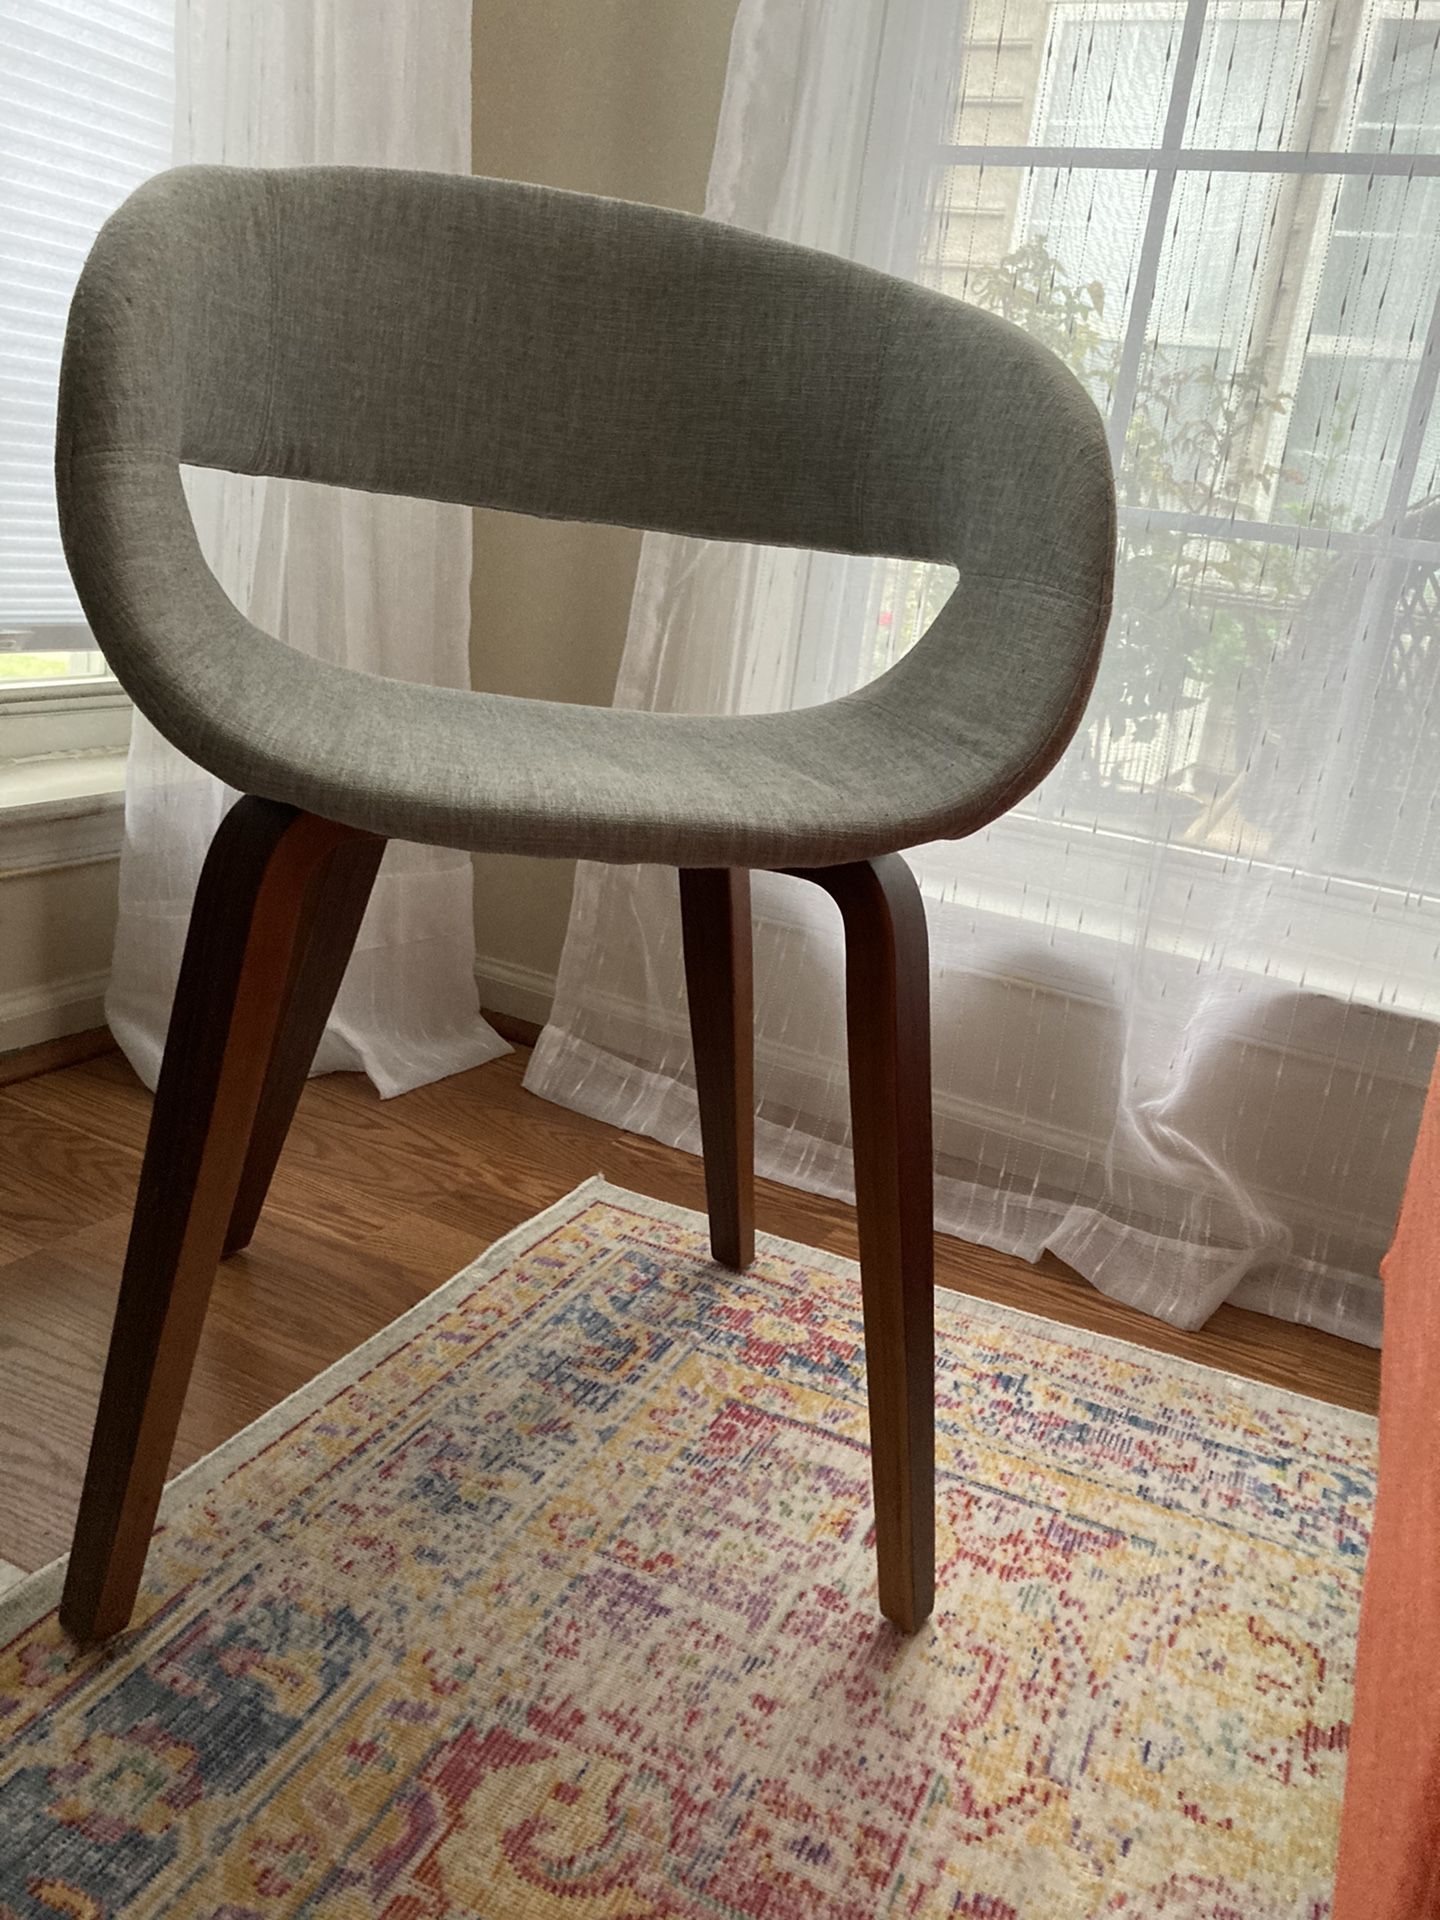 Mid century style chair